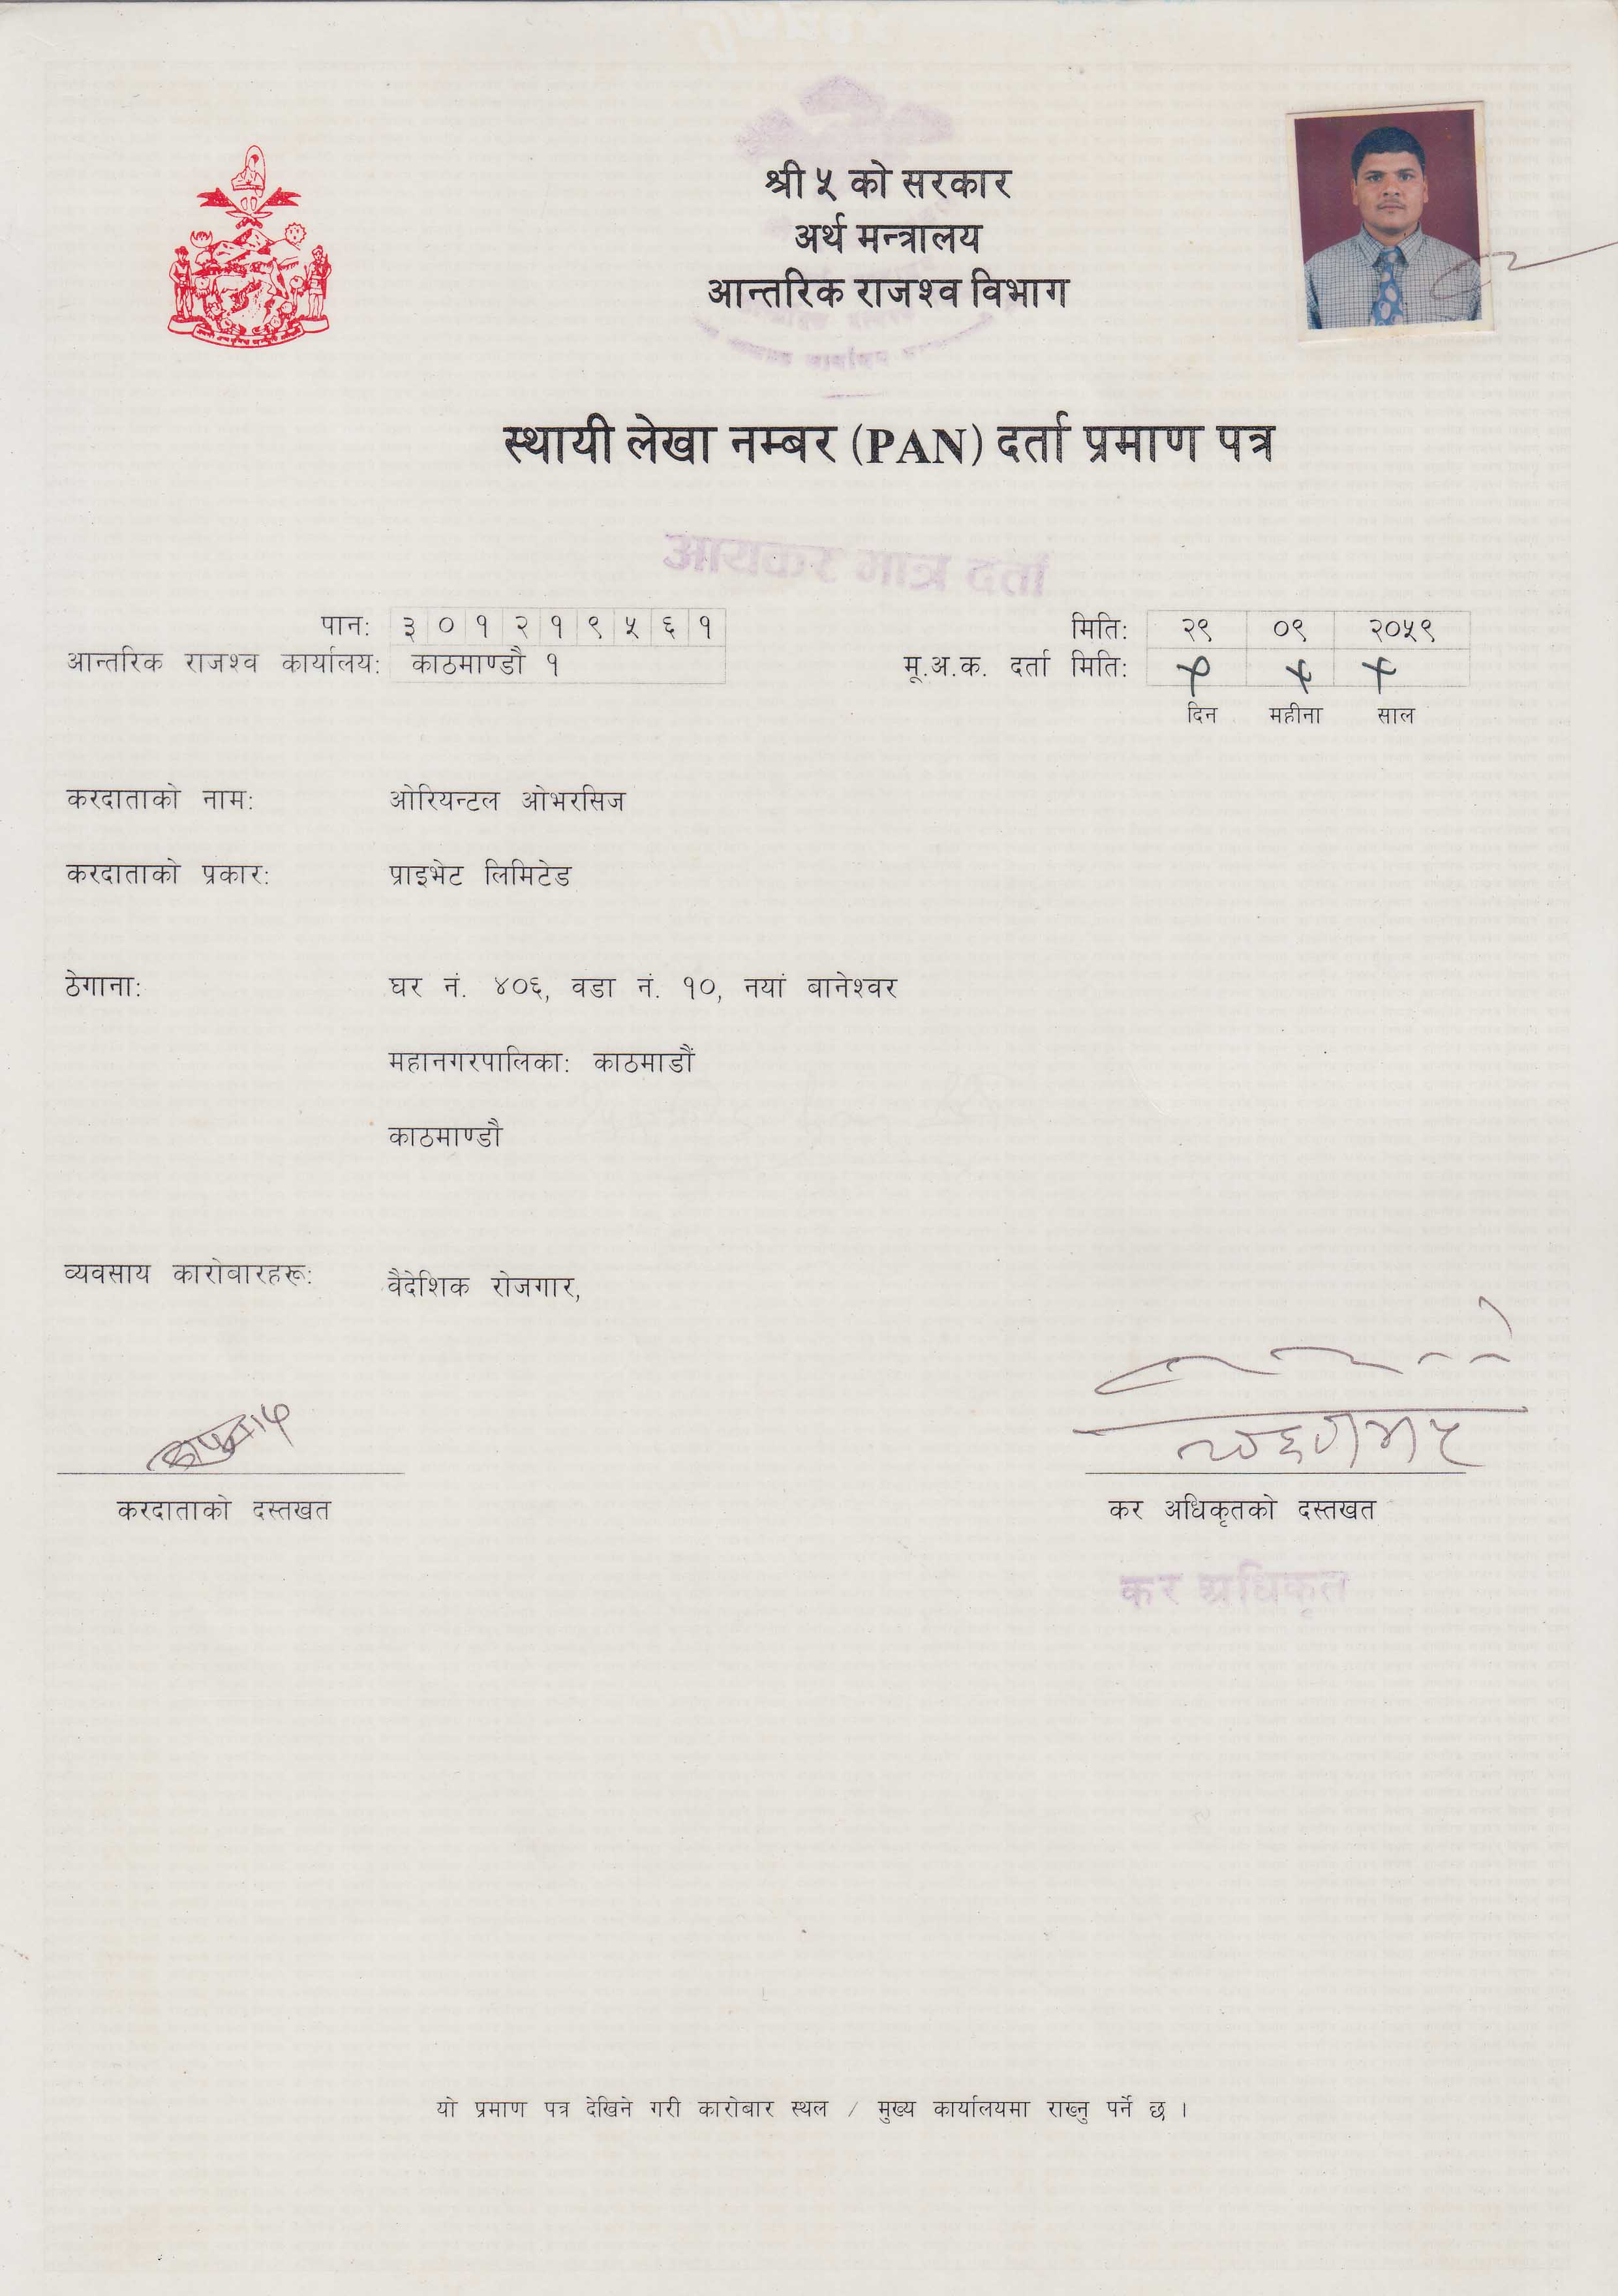 Company PAN Certificate